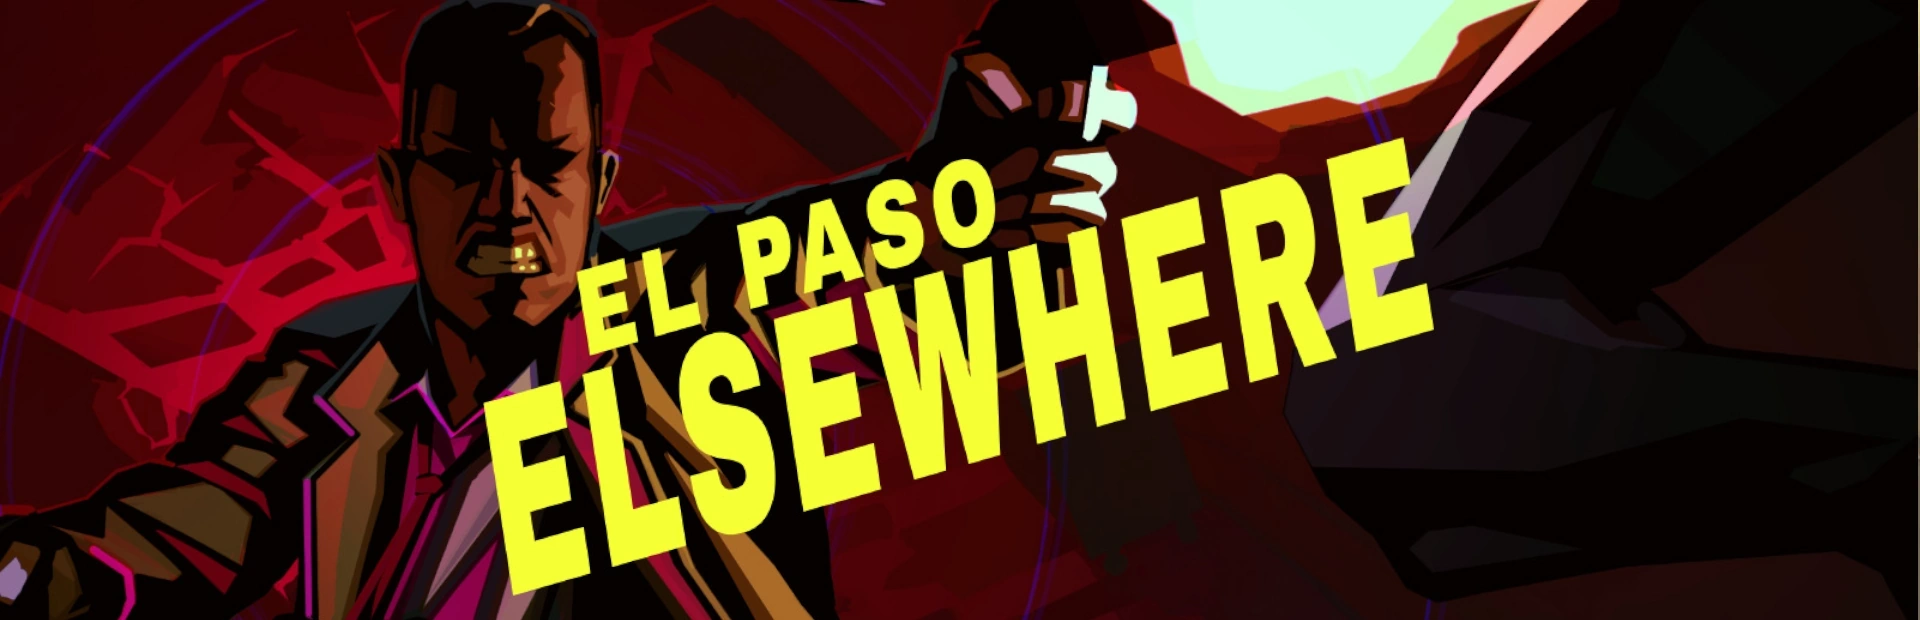 El.Paso Elsewhere.banner3 1